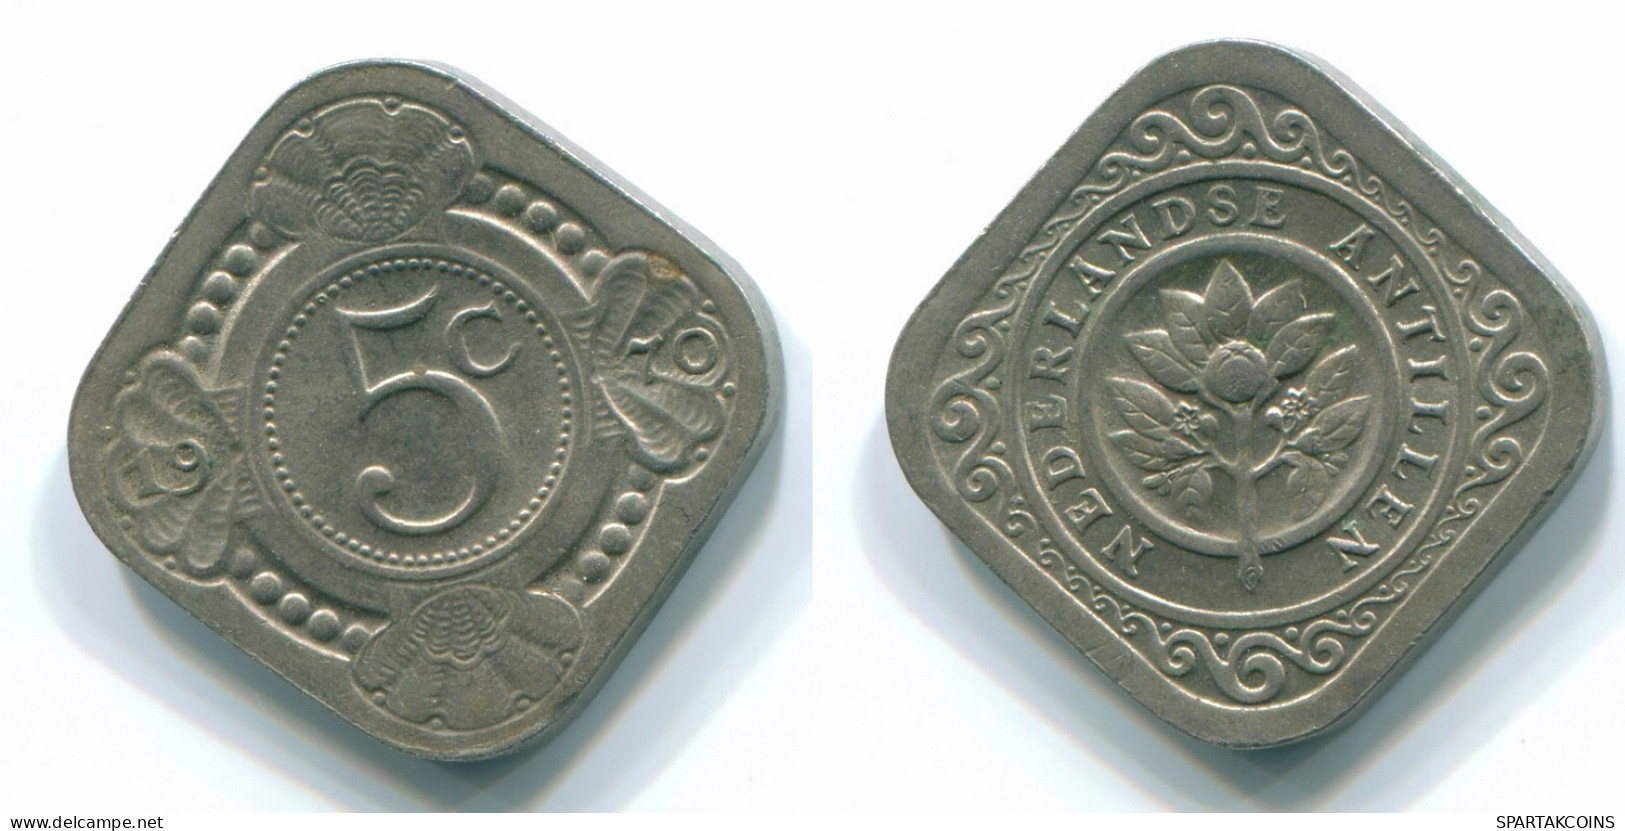 5 CENTS 1970 NETHERLANDS ANTILLES Nickel Colonial Coin #S12512.U.A - Antilles Néerlandaises